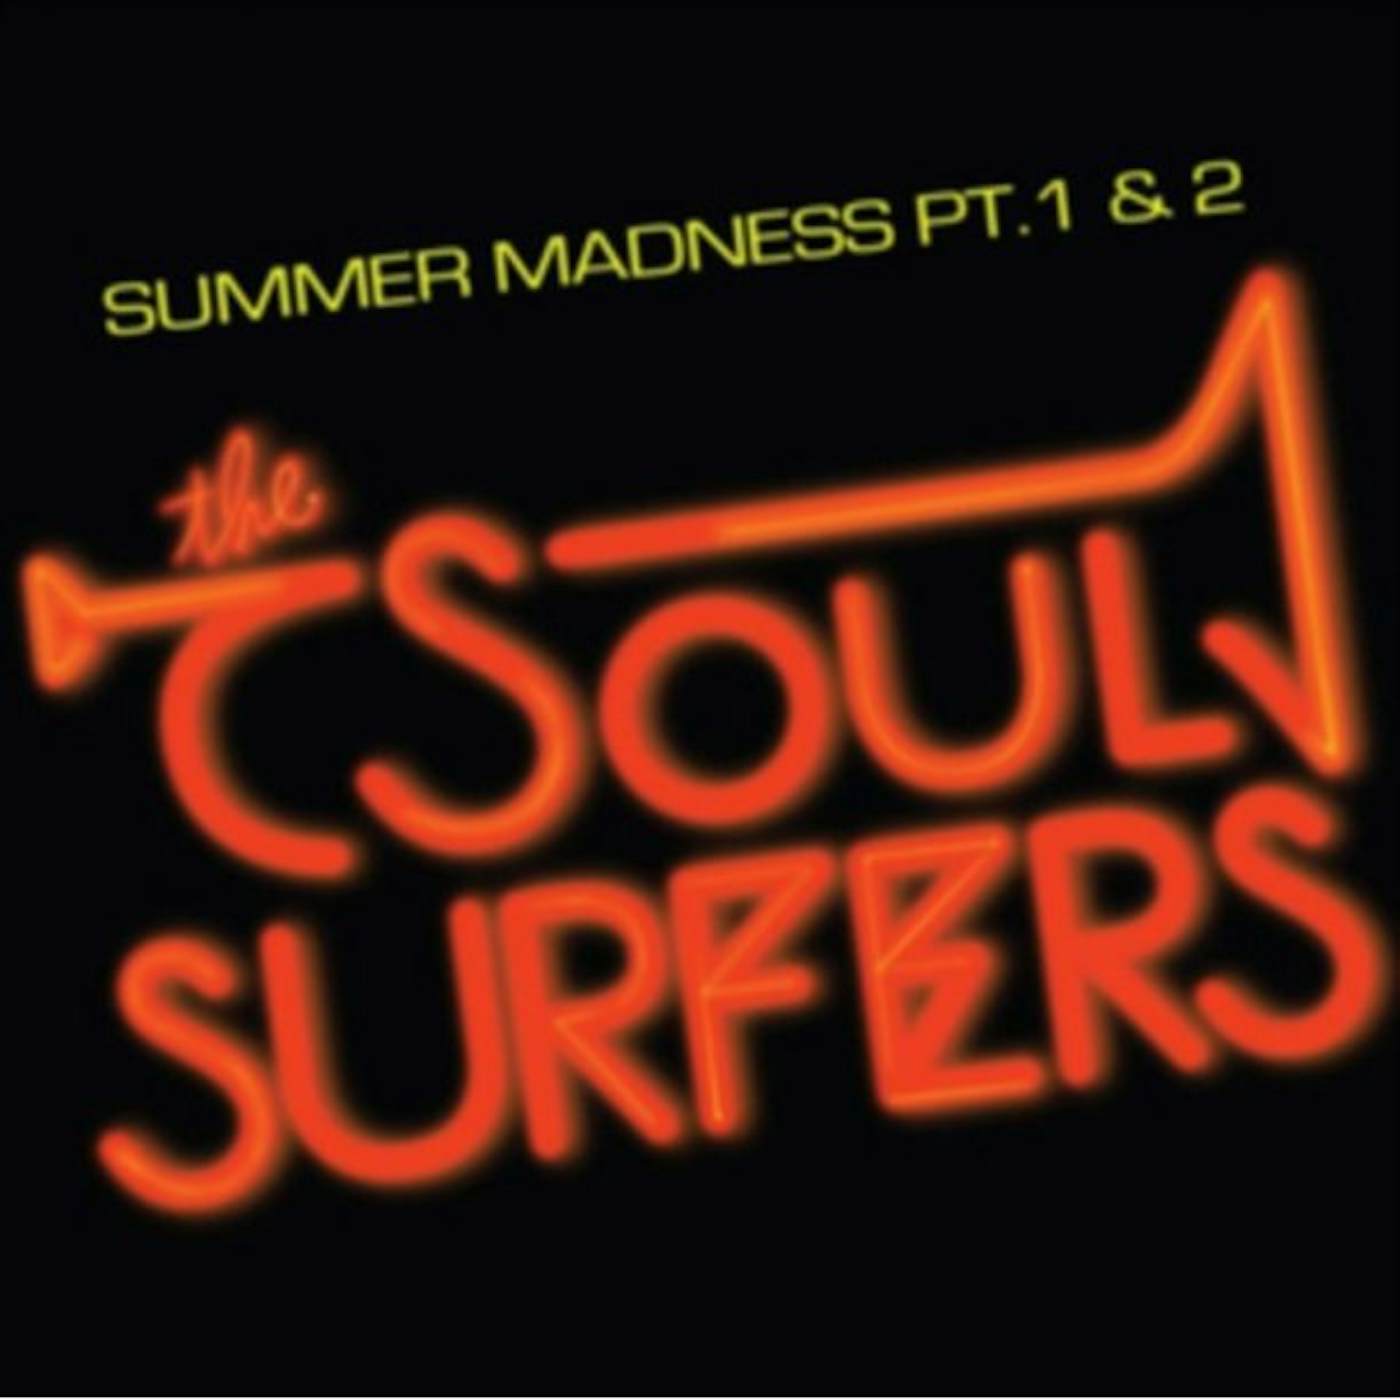 Soul Surfers SUMMER MADNESS PT. 1 / SUMMER MADNESS PT. 2 Vinyl Record